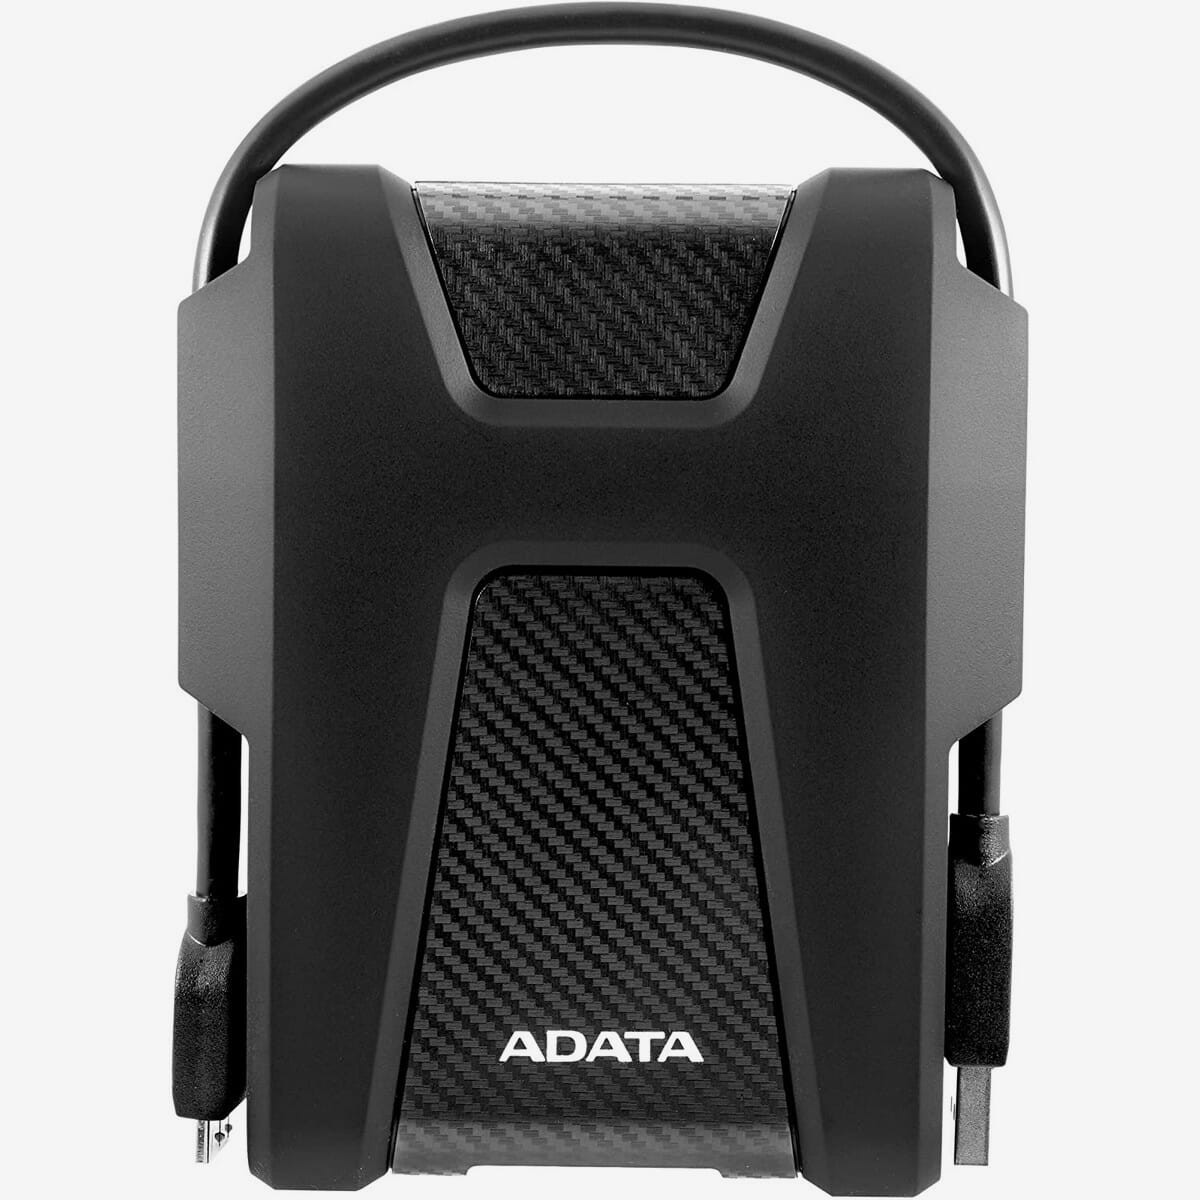 ADATA External Hard Drive HD680 (Super Speed USB 3.2 | Shock Absorbing | LED Indicator | Detachable USB Cable)